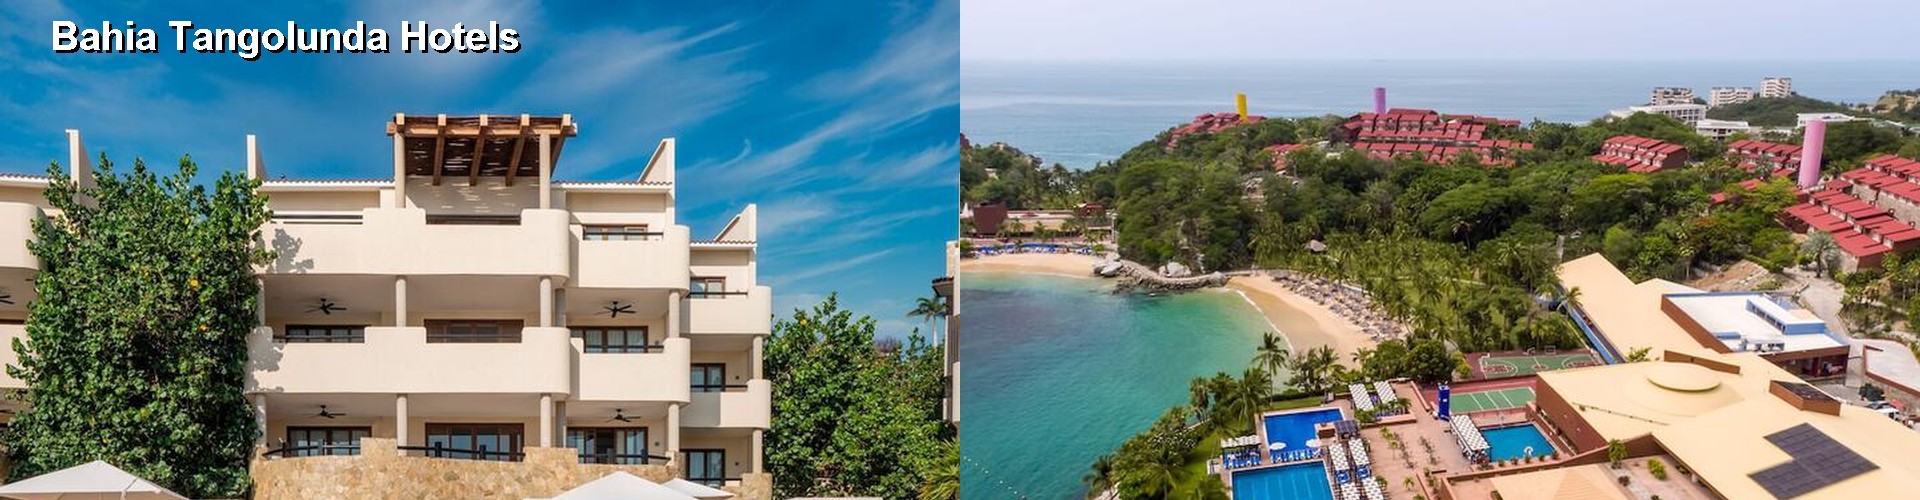 5 Best Hotels near Bahia Tangolunda